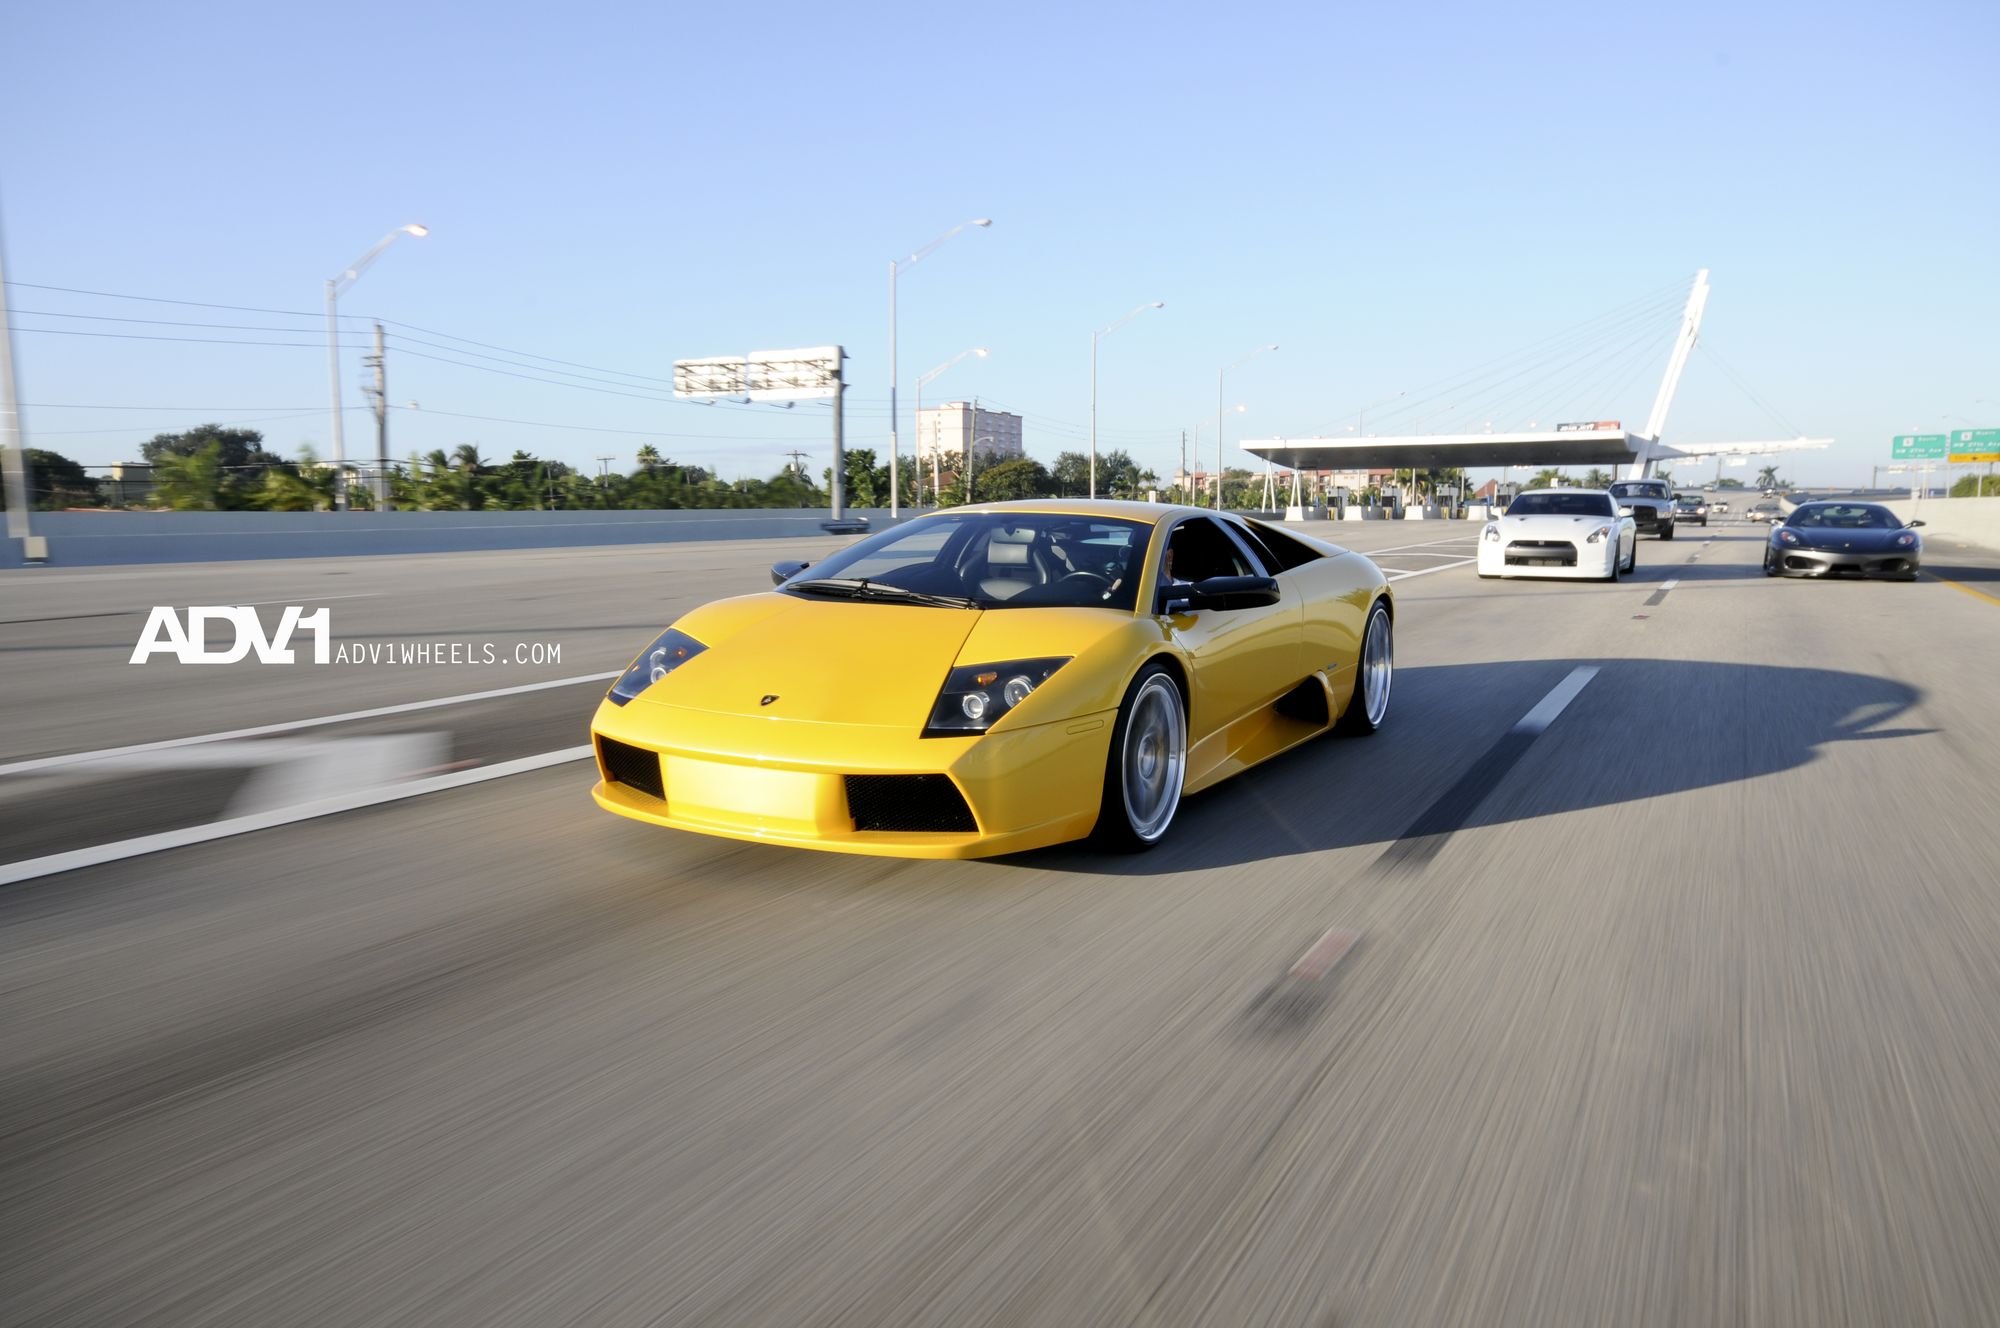 Aftermarket Headlights on Yellow Lamborghini Murcielago - Photo by ADV.1